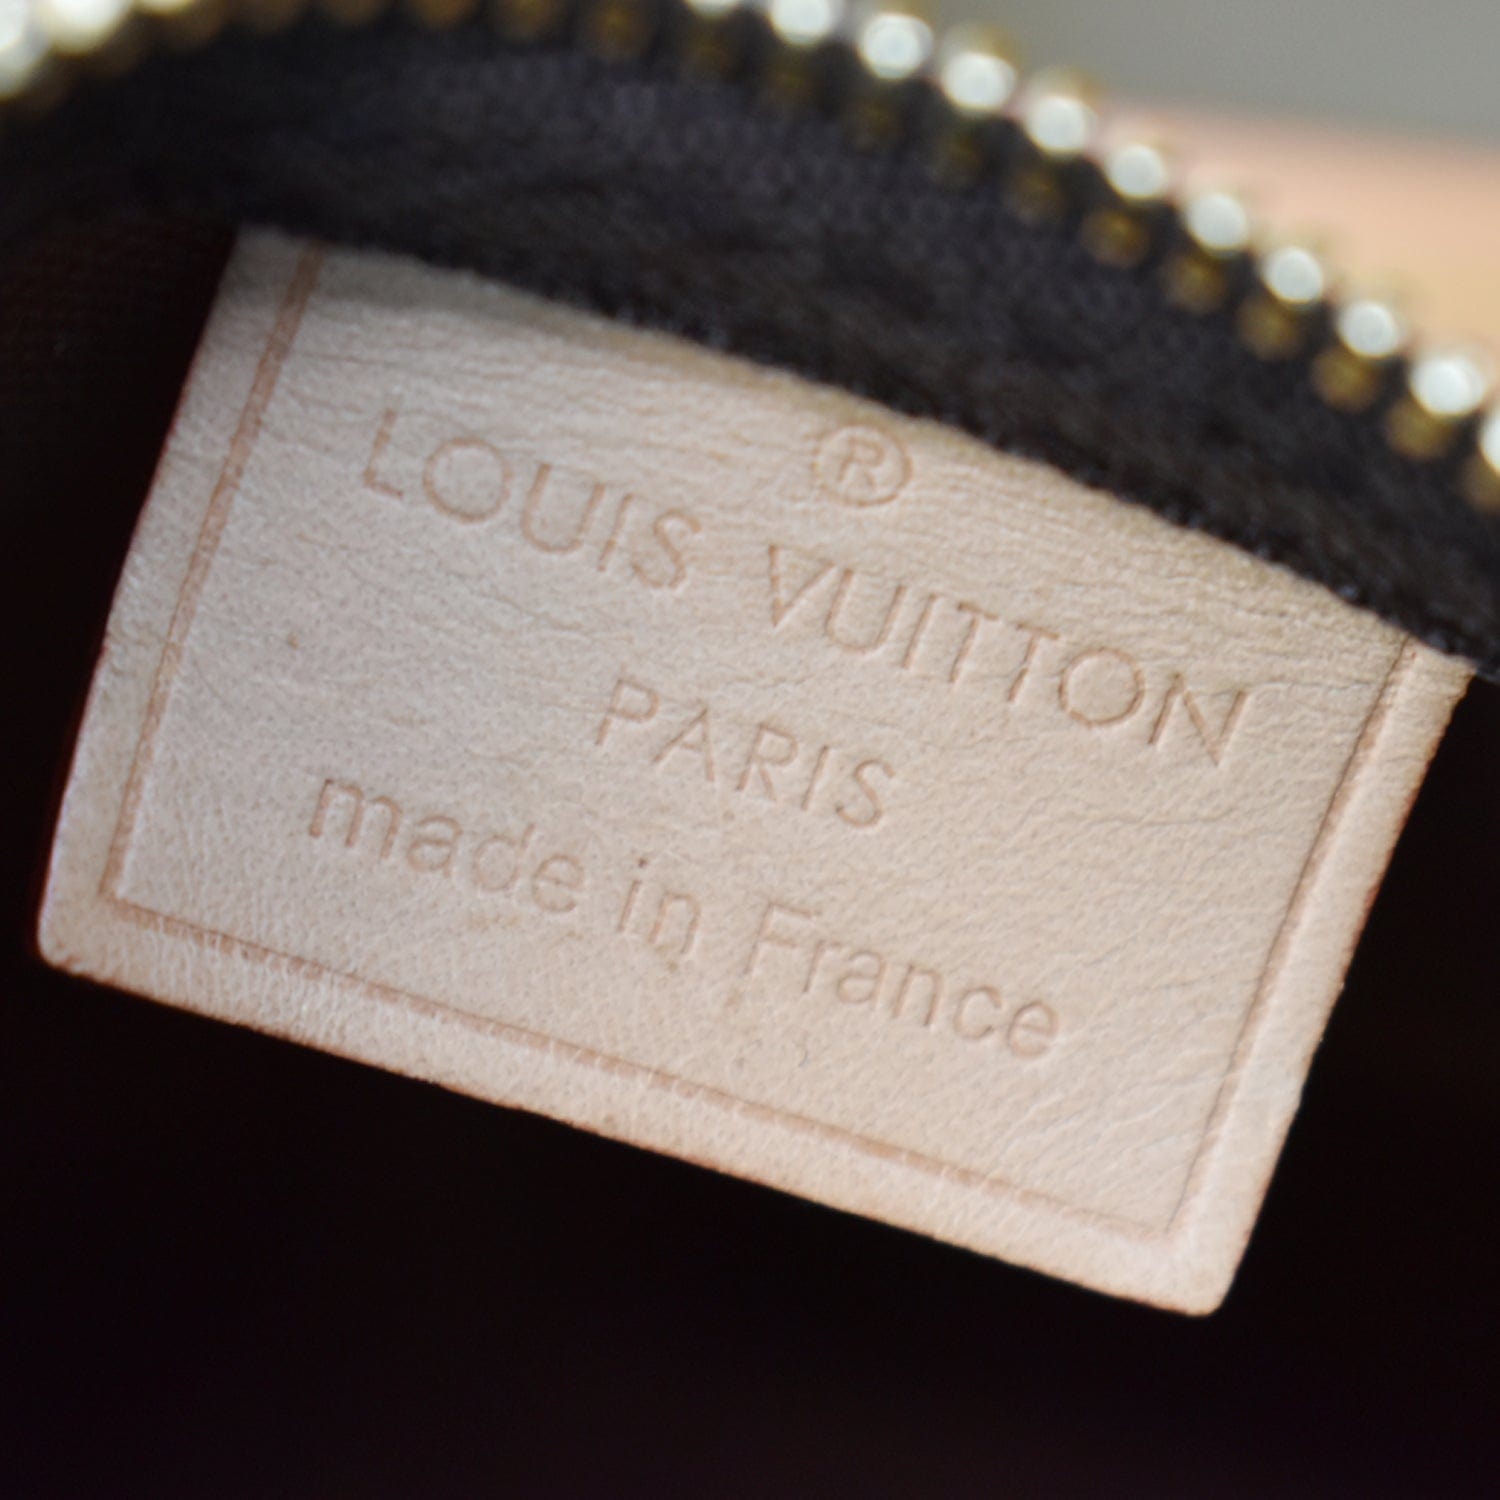 Nano speedy / mini hl leather crossbody bag Louis Vuitton Brown in Leather  - 32927453